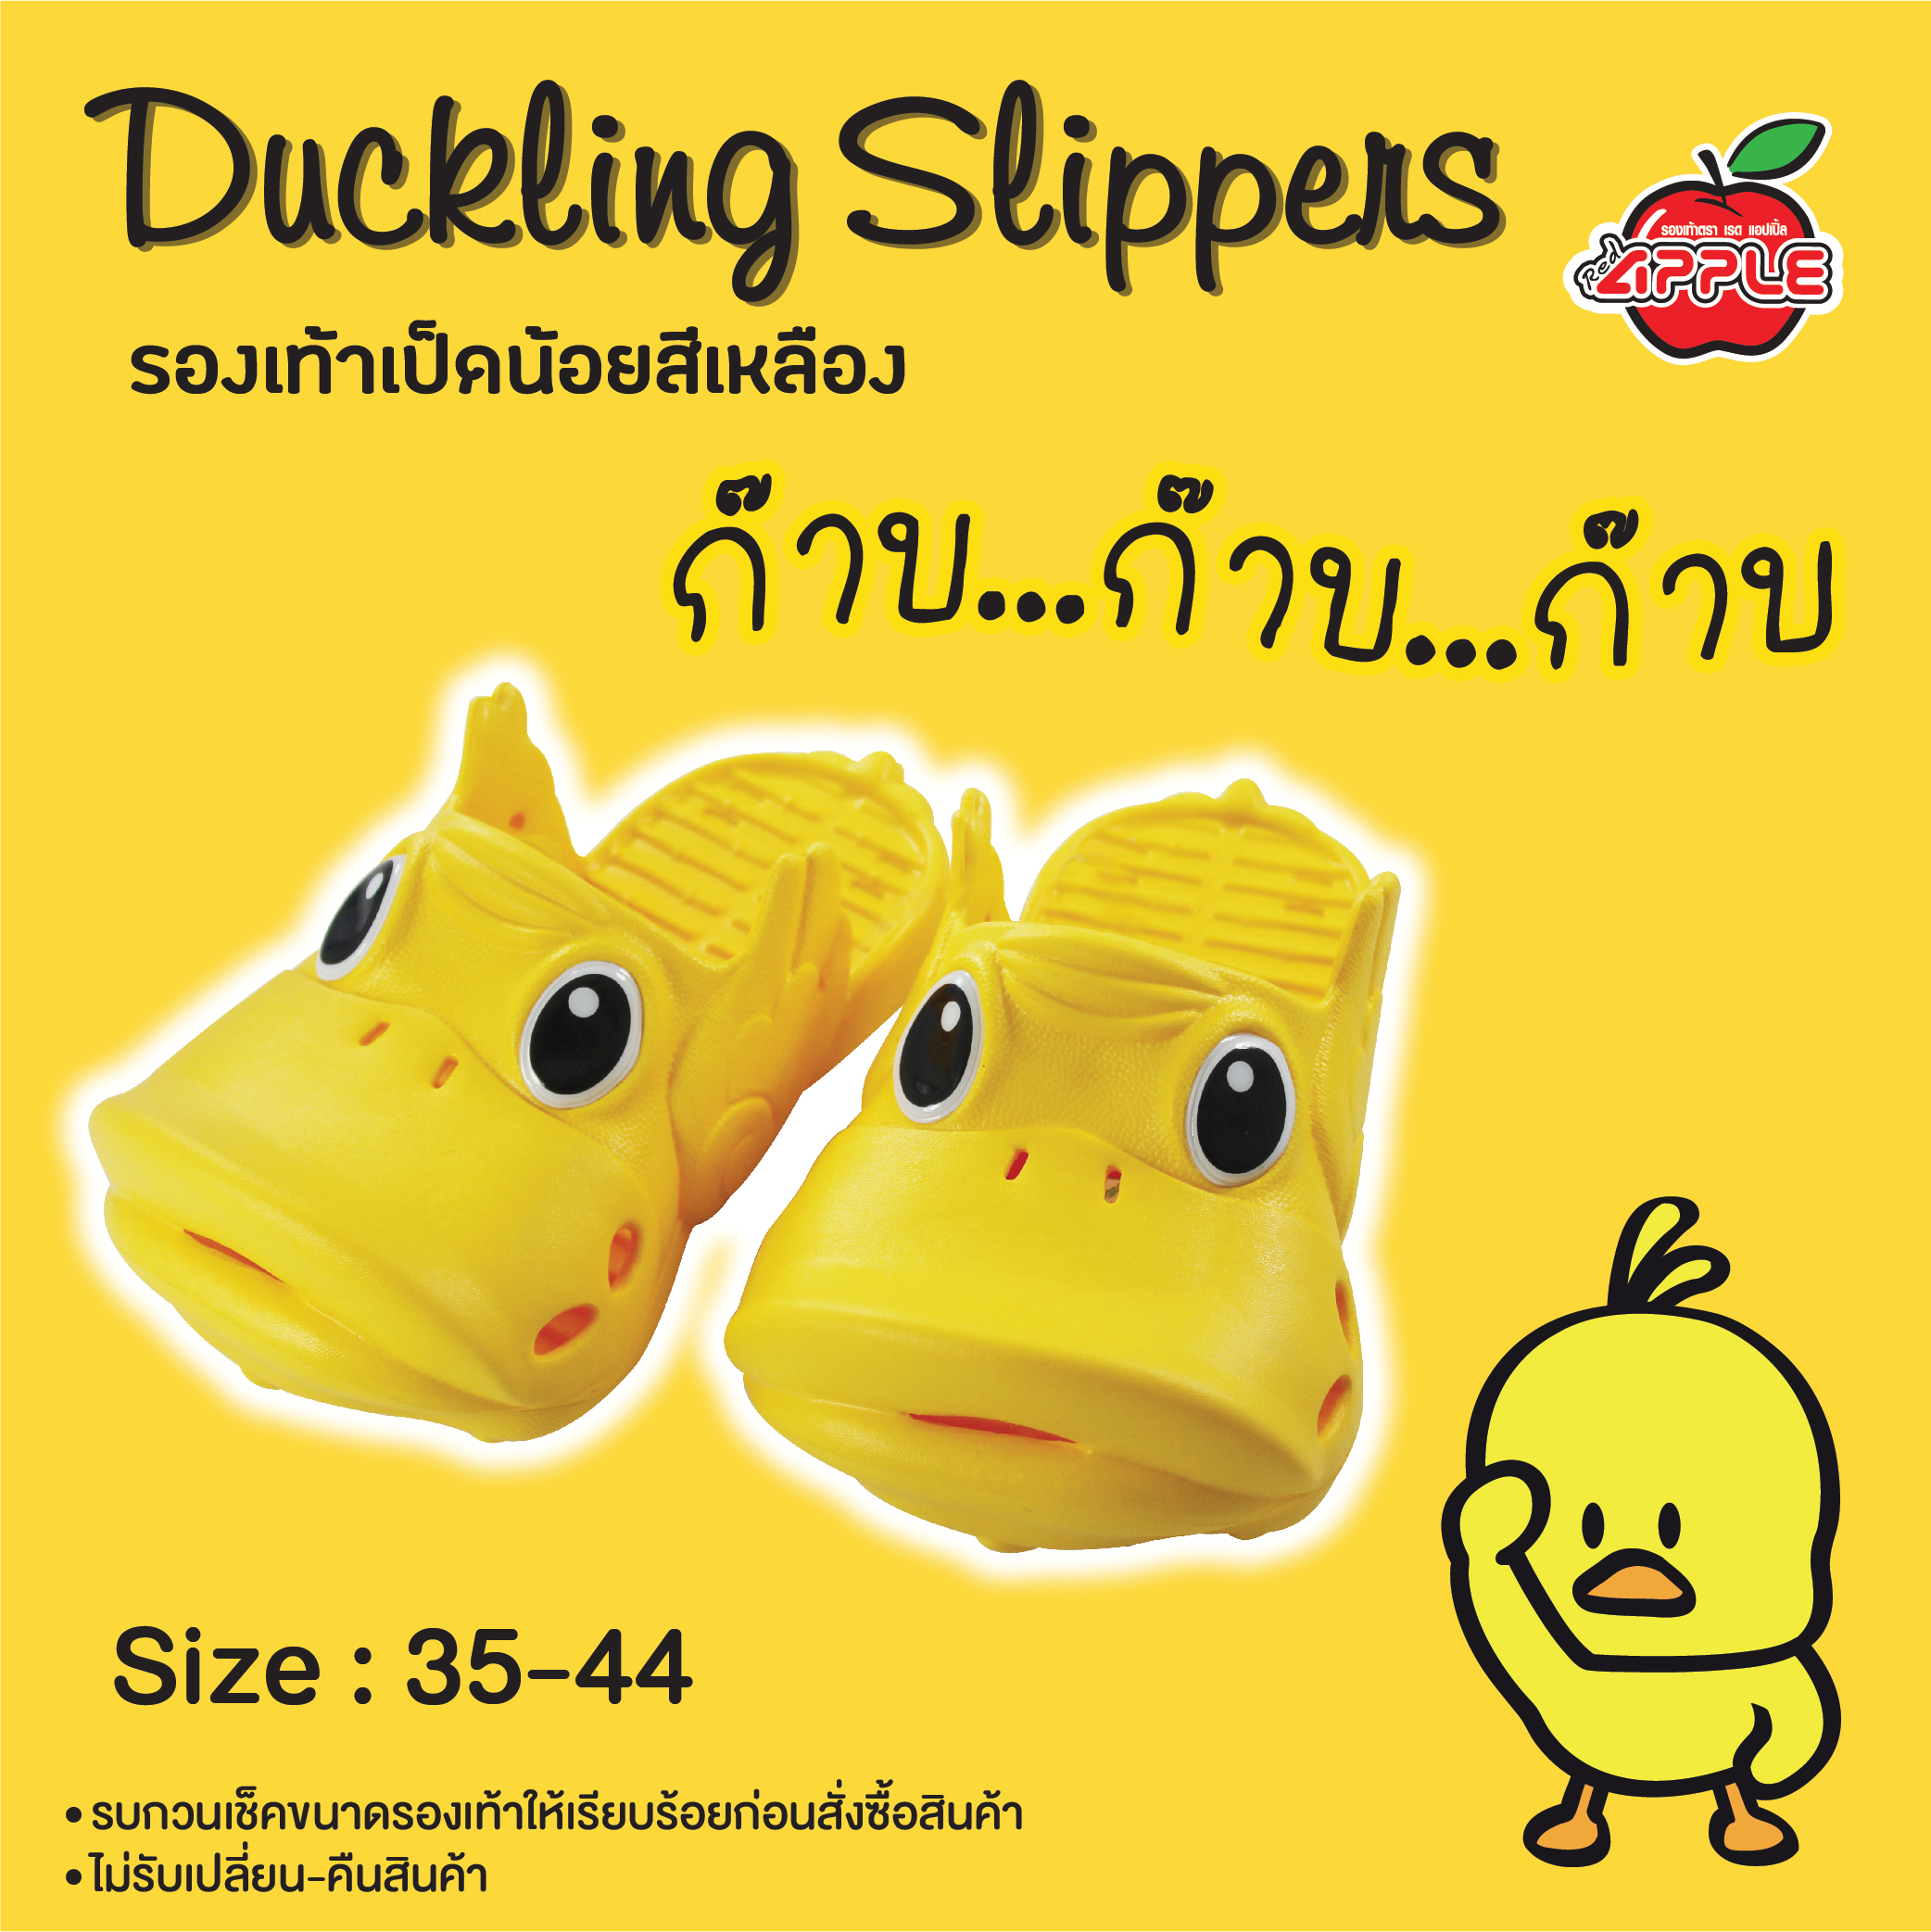 Duckling Slippers รองเท้าเป็ดน้อย รุ่นผู้ใหญ่ #35- #44